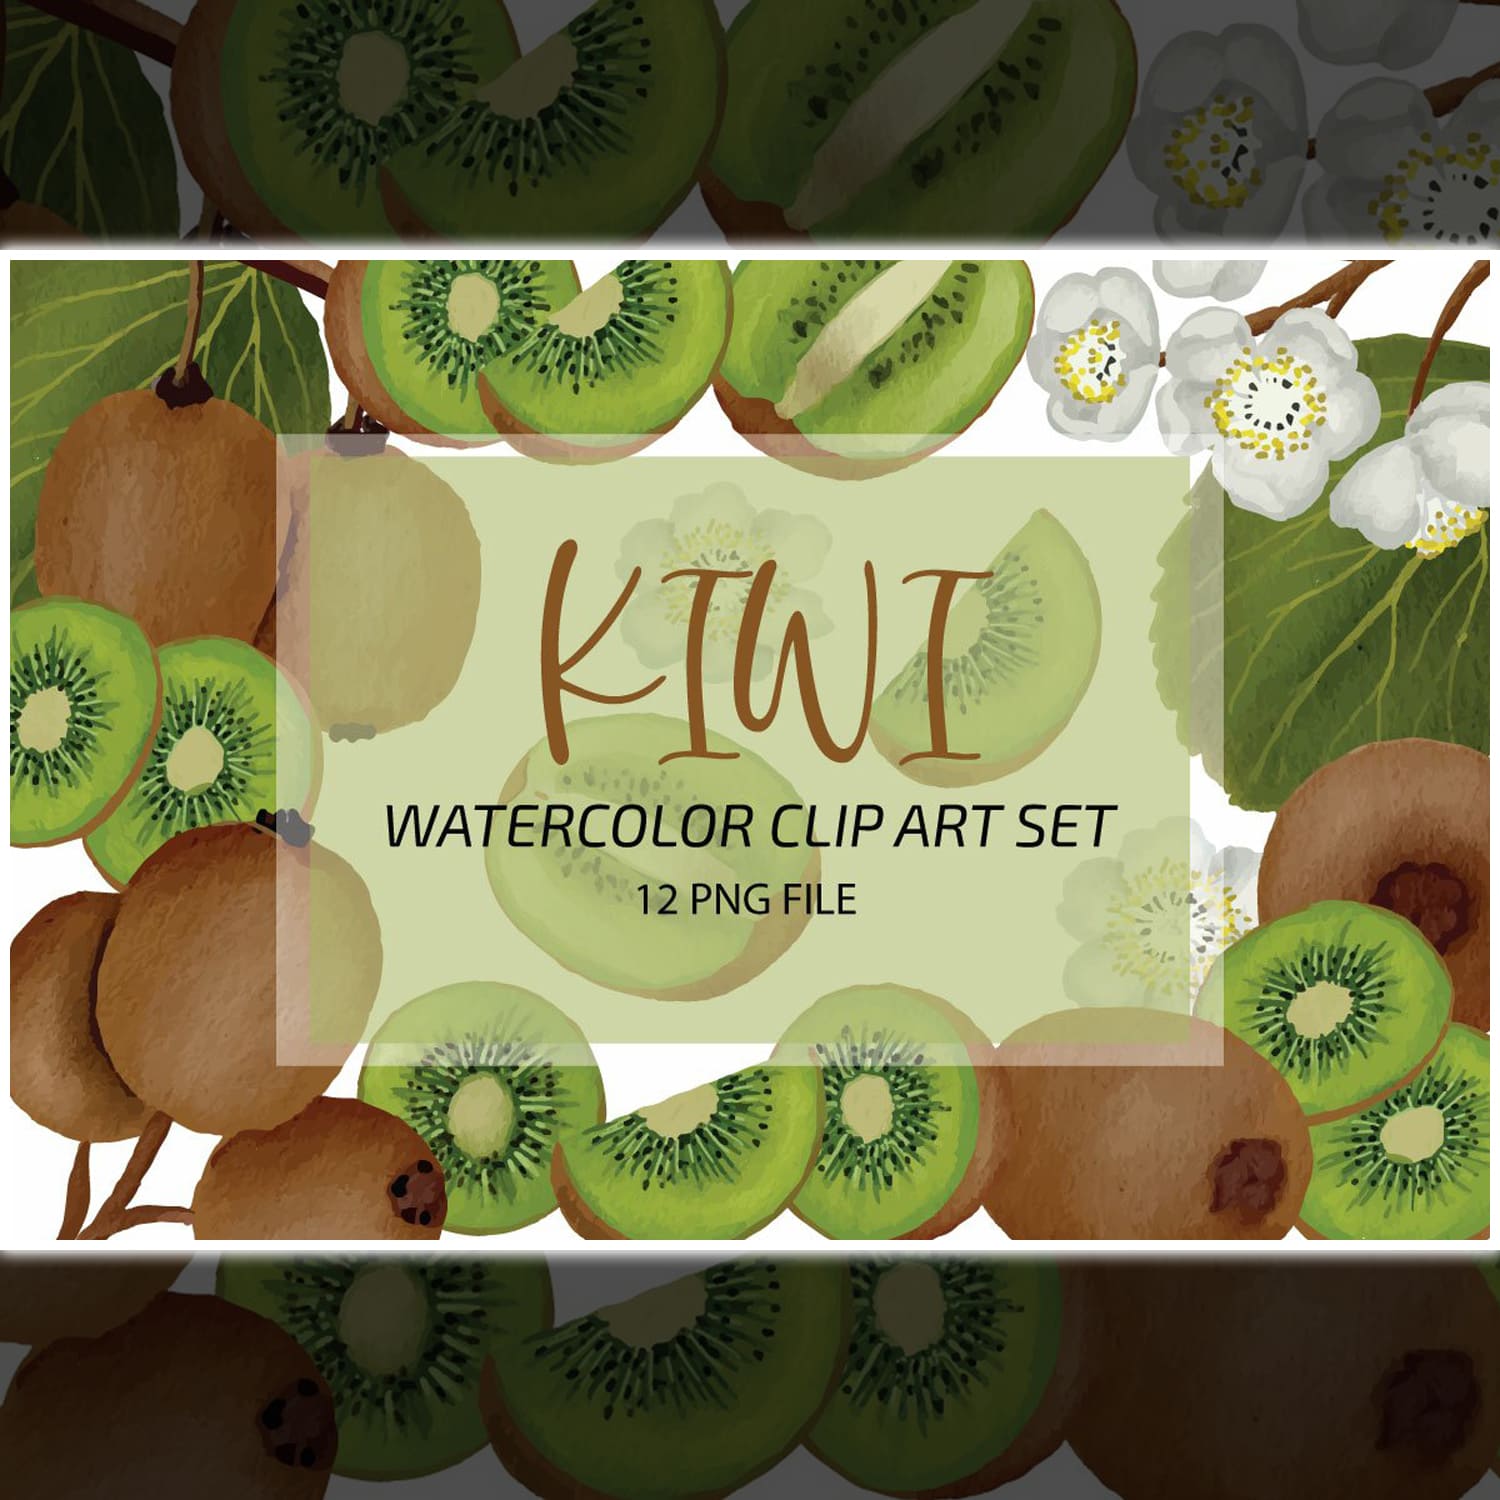 Kiwi Fruit Watercolor Clip Art Set PNG cover.